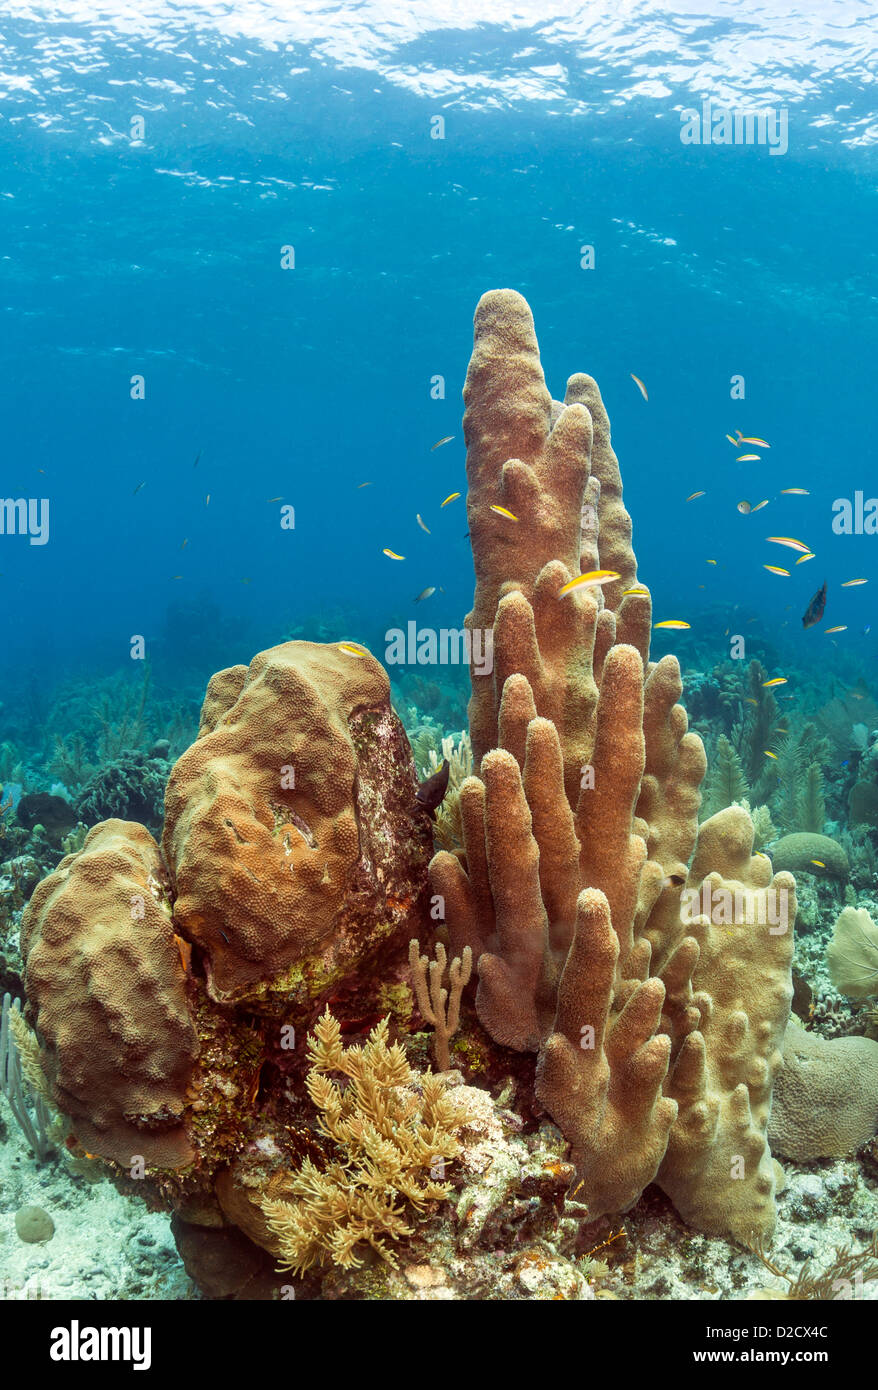 Coral reef underwate off coast of Roatan Stock Photo